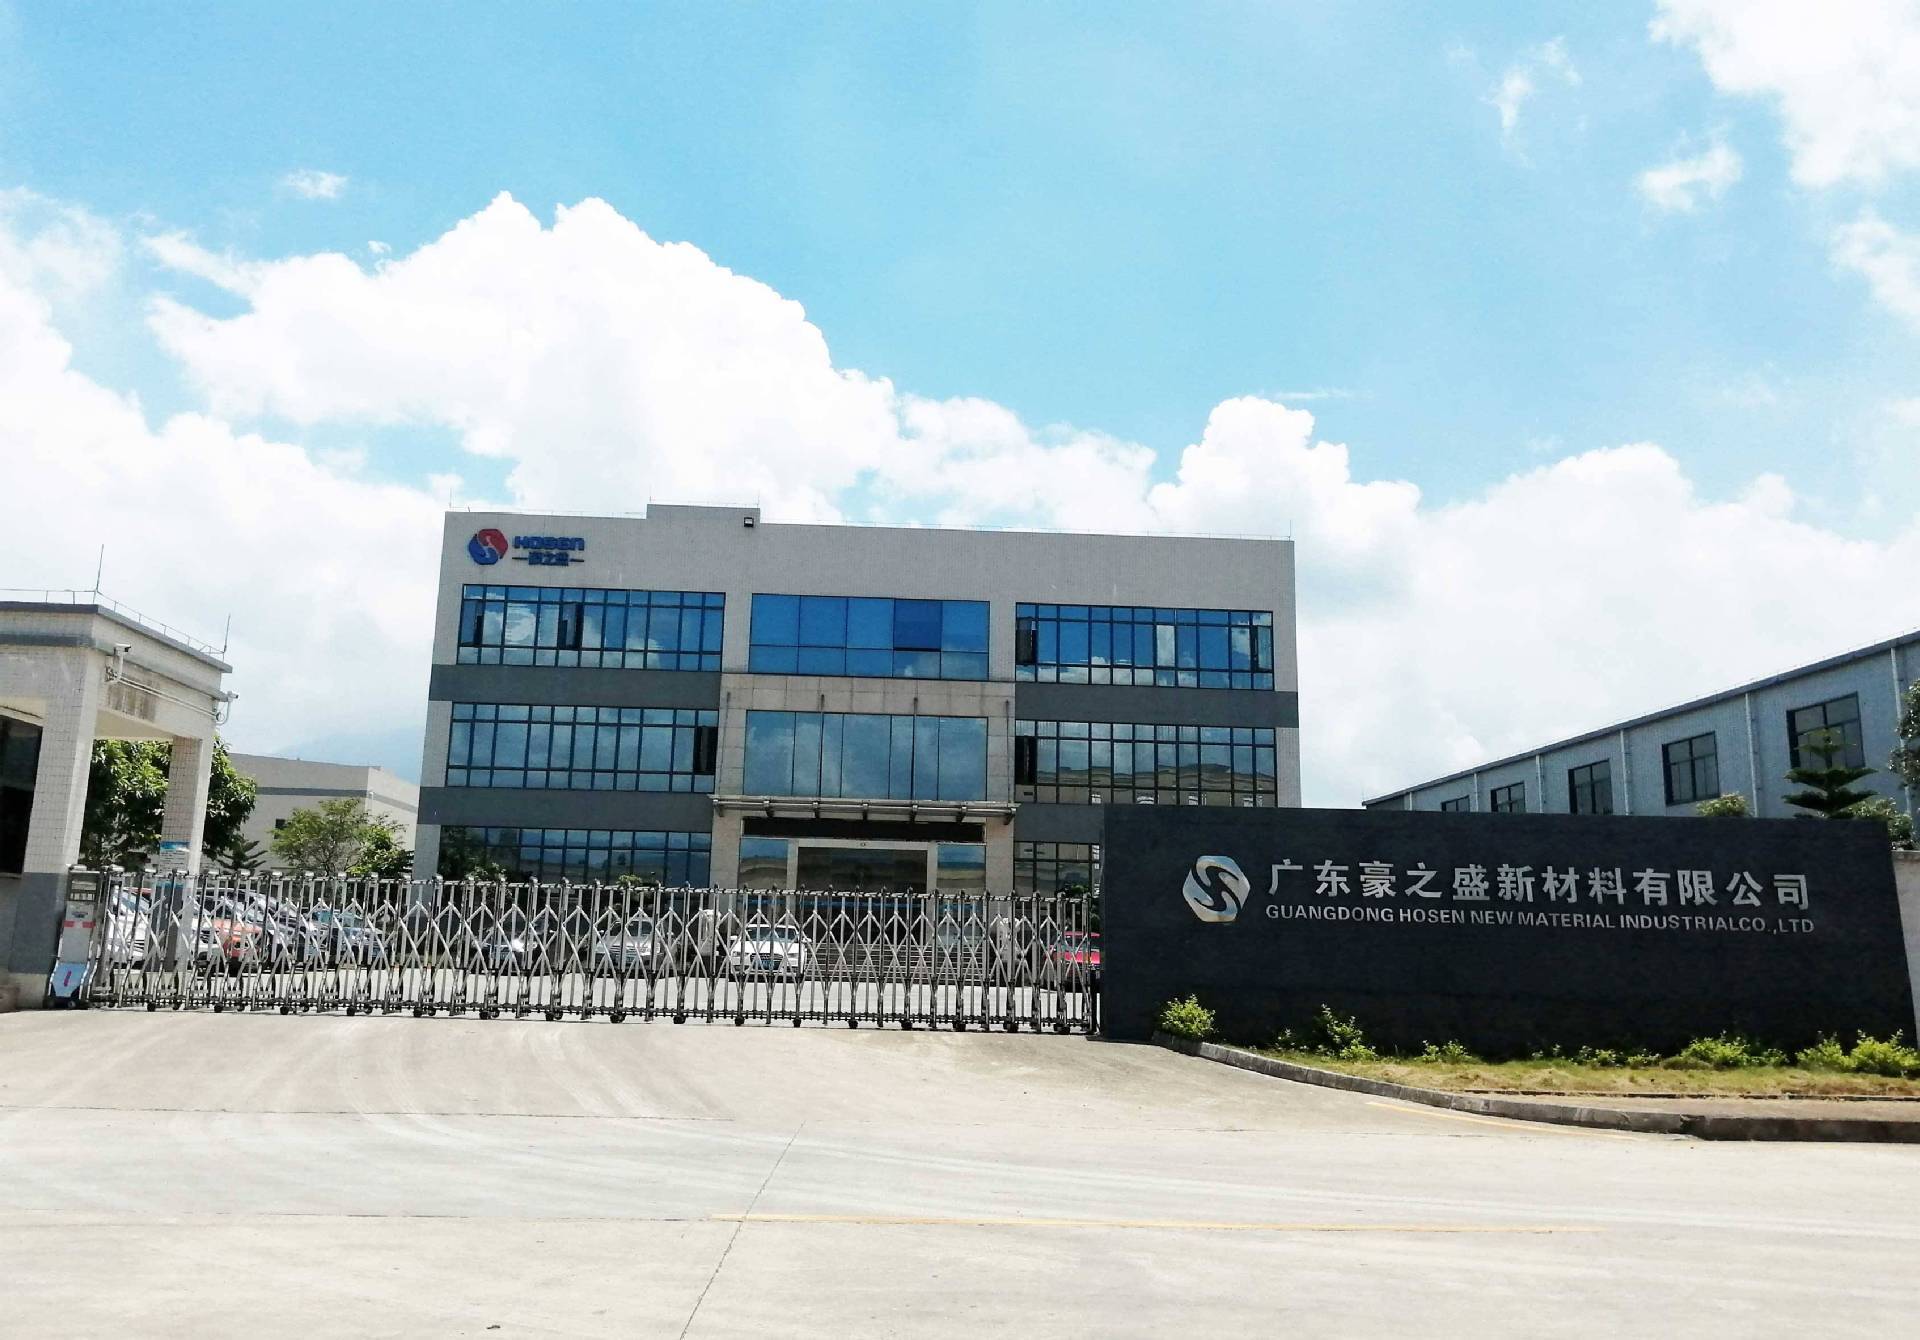 Guangdong Haozhisheng New Materials Co., Ltd